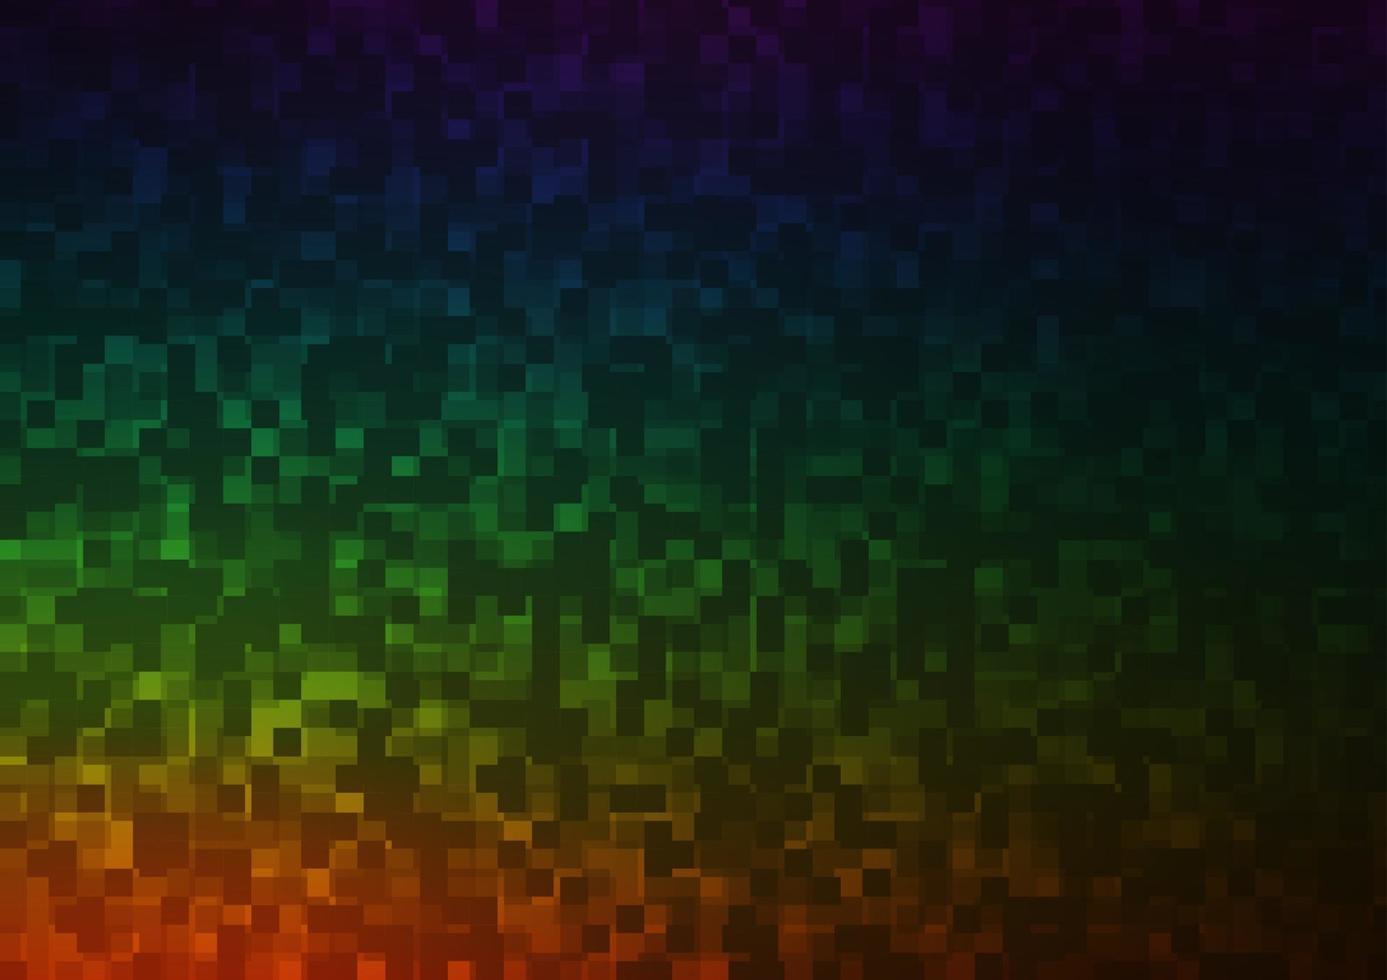 Dark Multicolor, Rainbow vector texture in rectangular style.